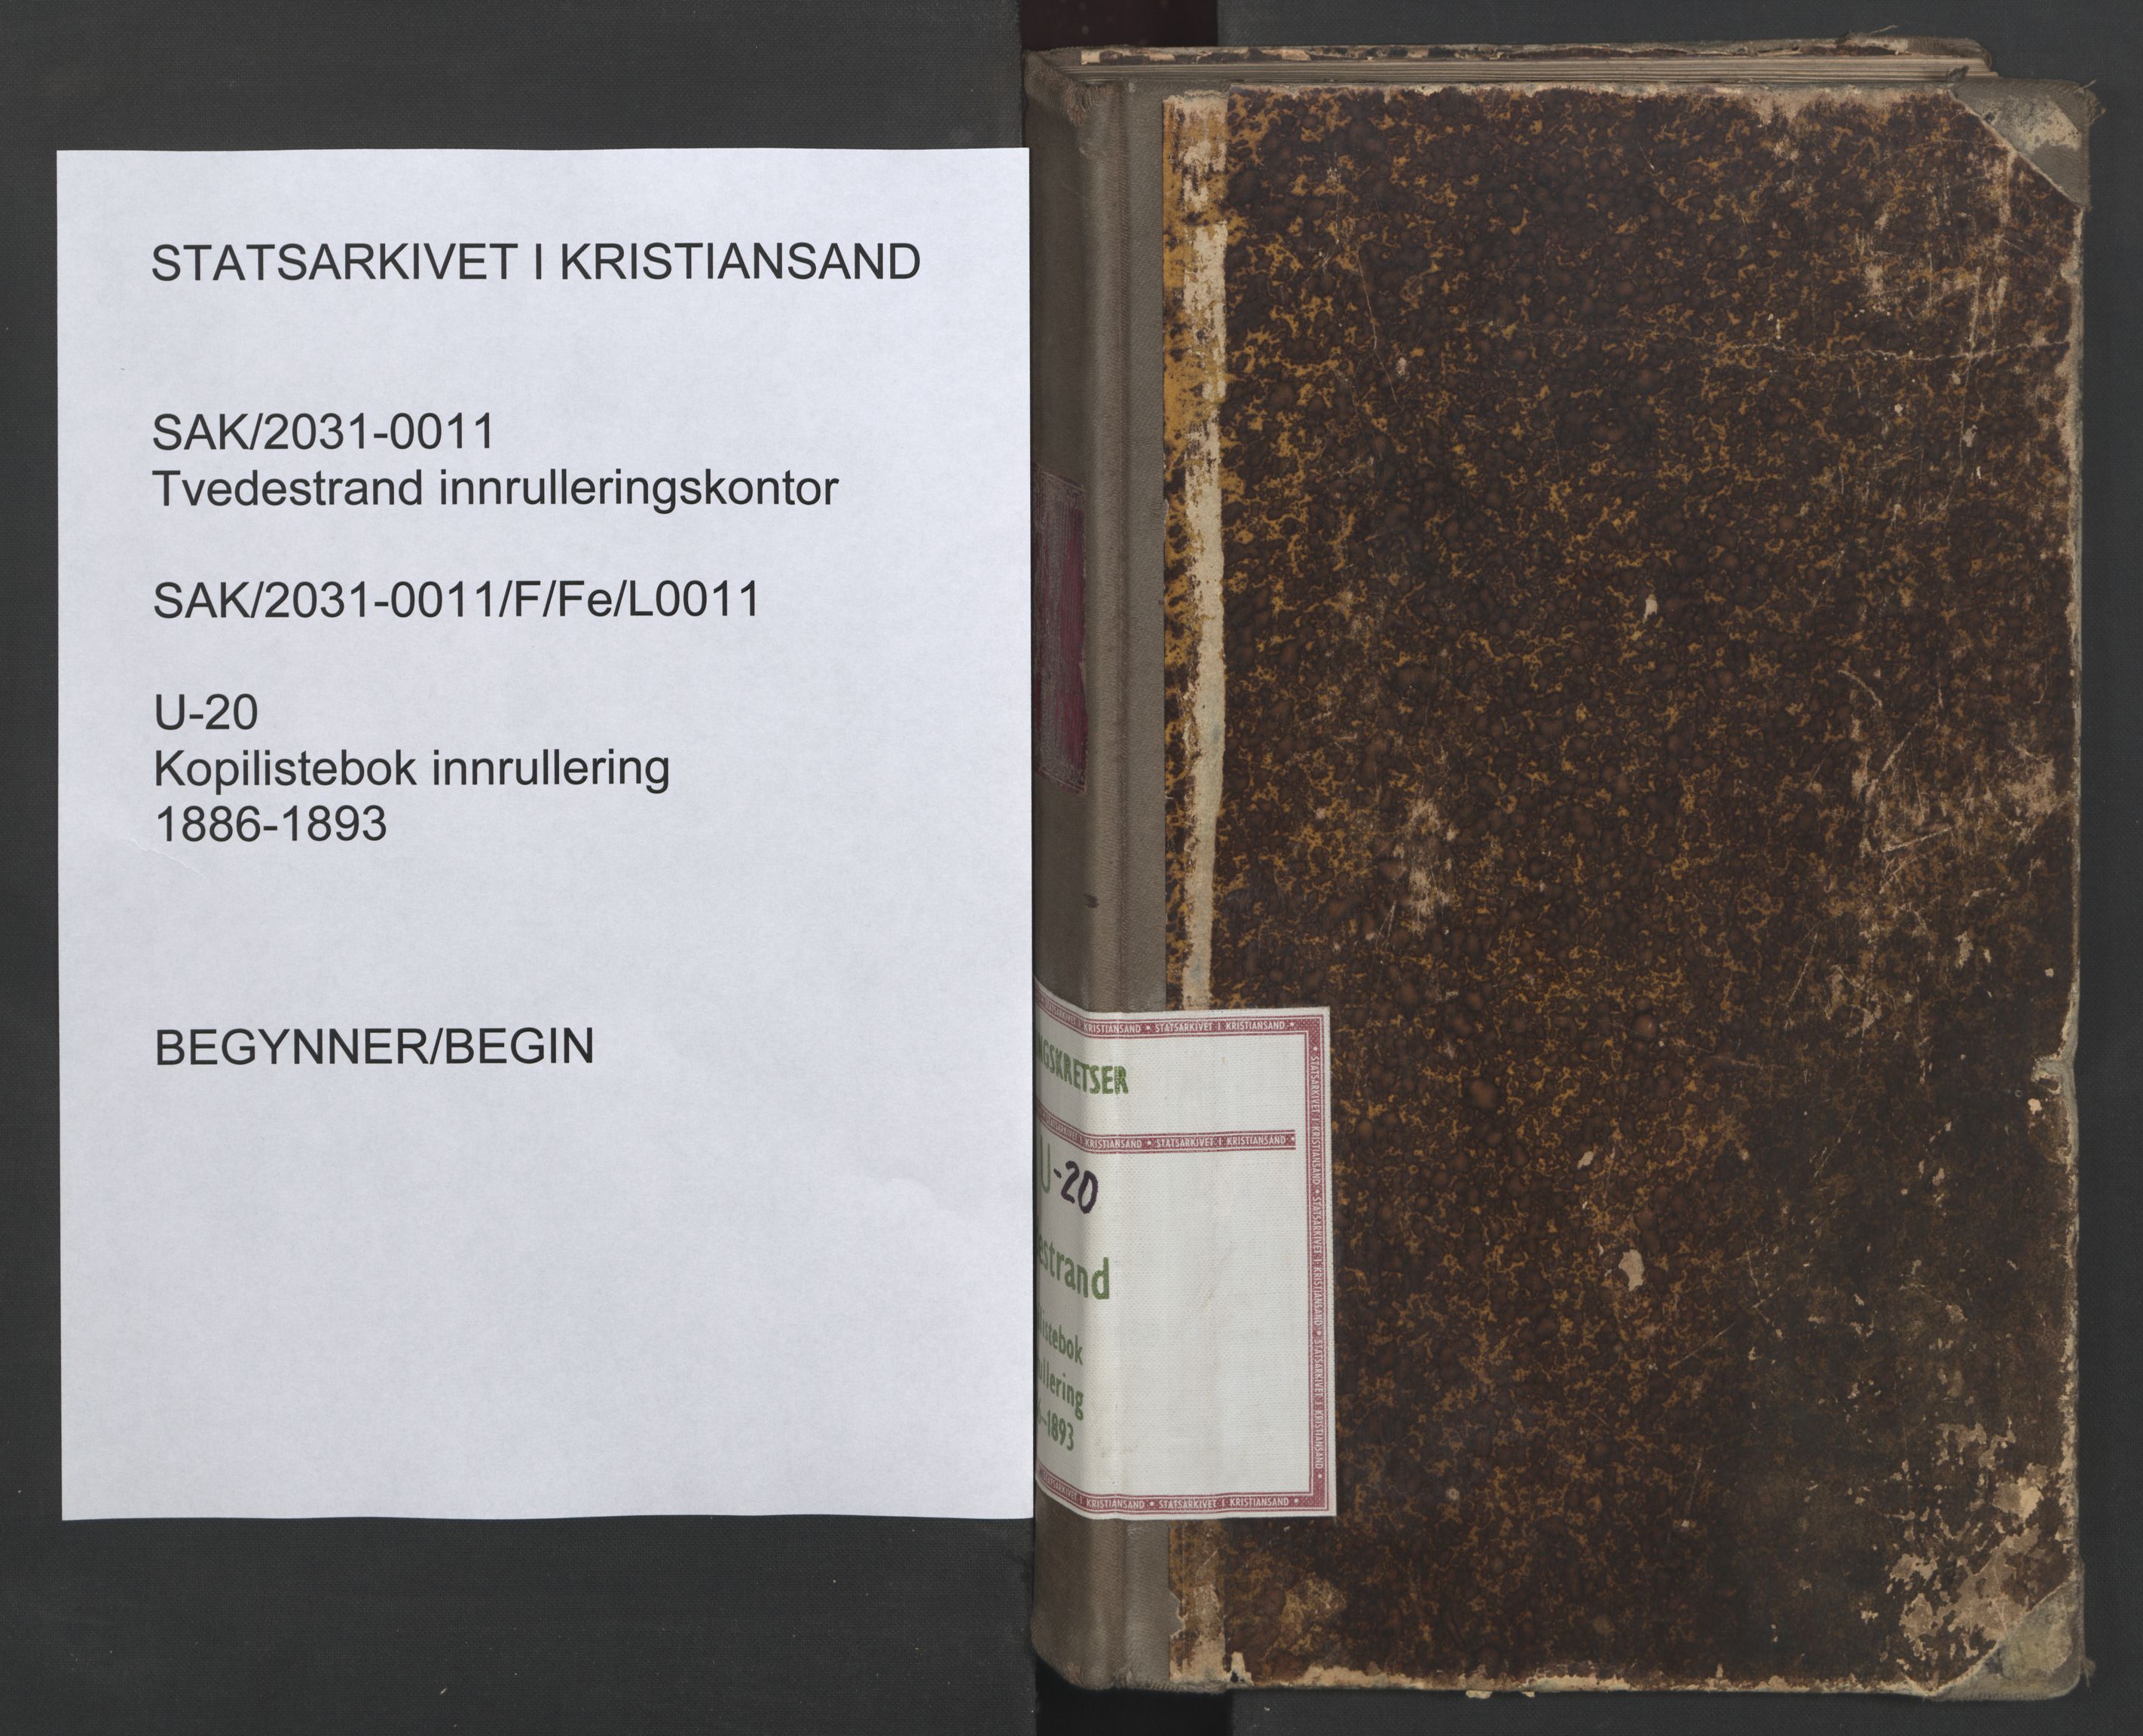 Tvedestrand mønstringskrets, SAK/2031-0011/F/Fe/L0011: Kopilistebok innrullering, U-20, 1886-1893, s. 1